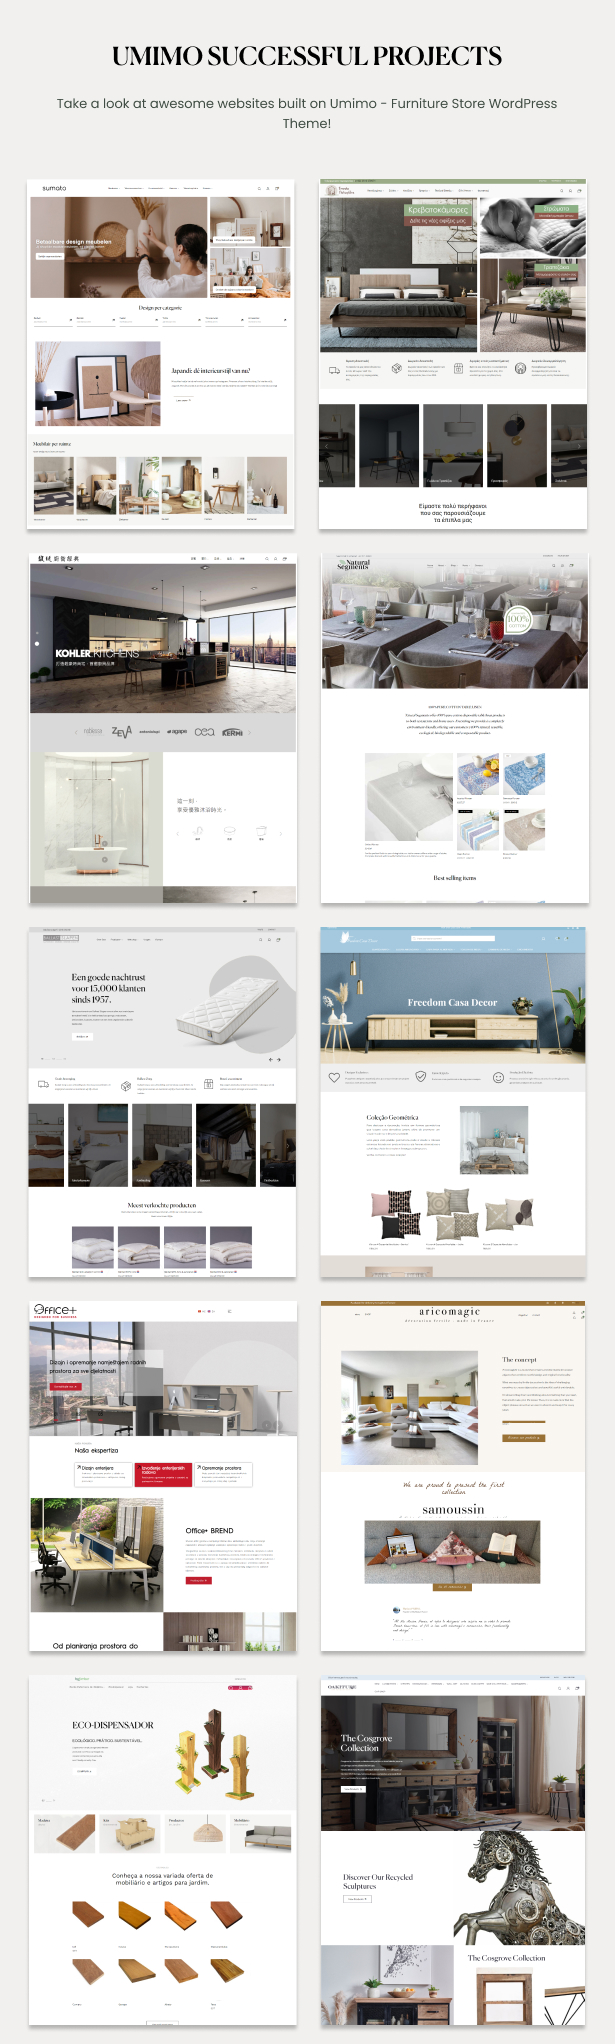 Umimo - Furniture Store WordPress Theme Showcase